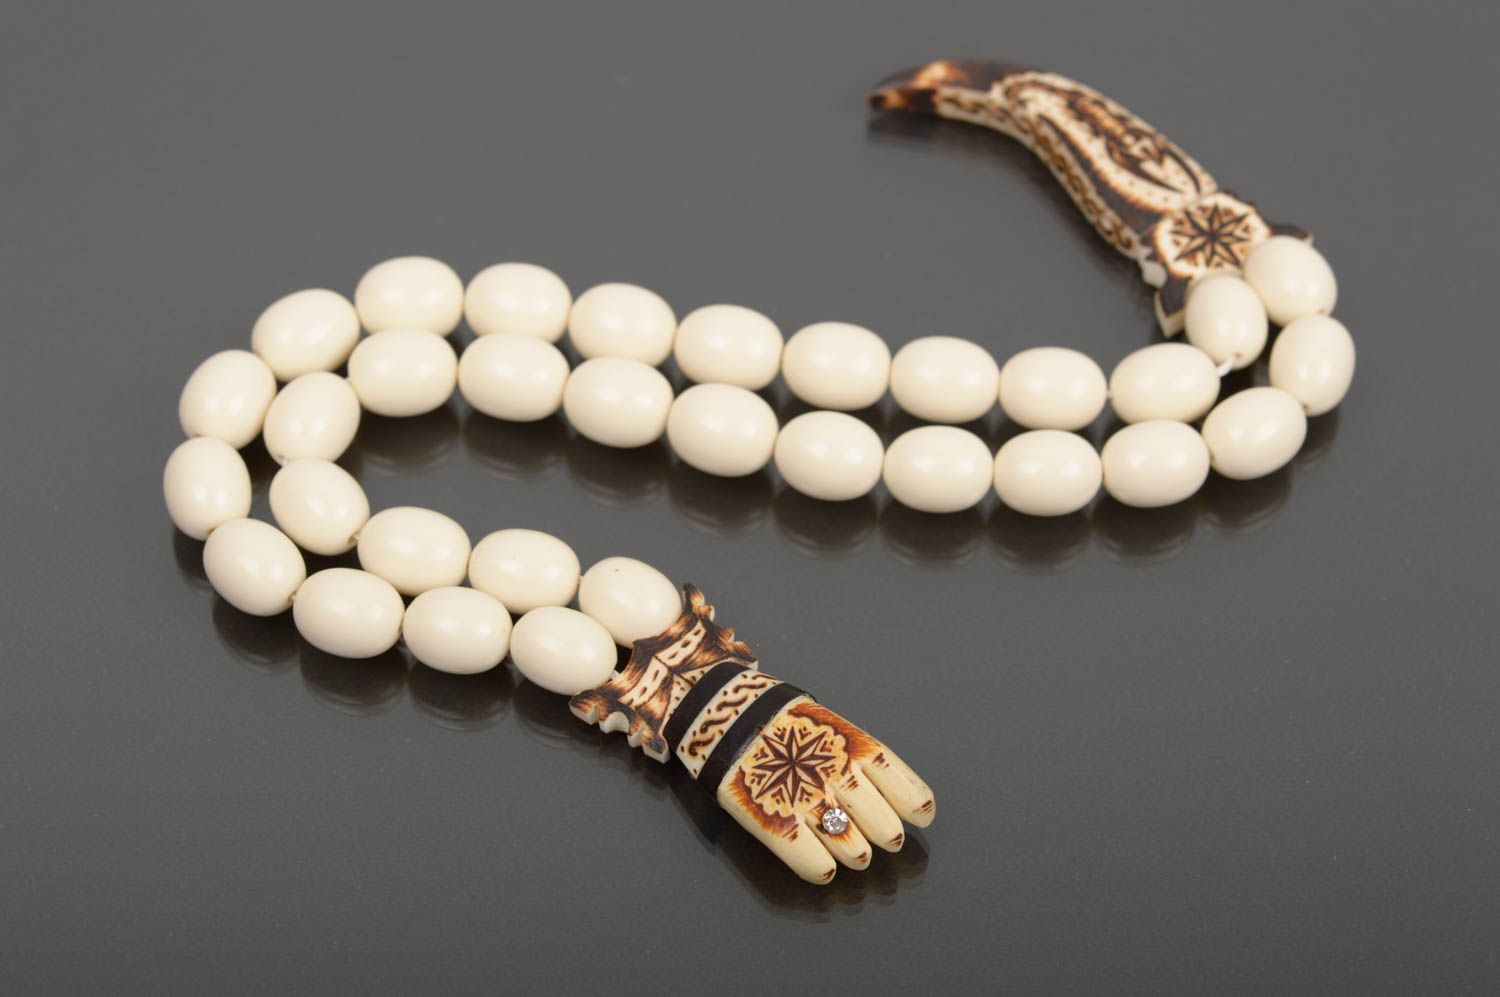 Handmade rosary beads church accessories spiritual gifts worry beads mens gifts photo 1